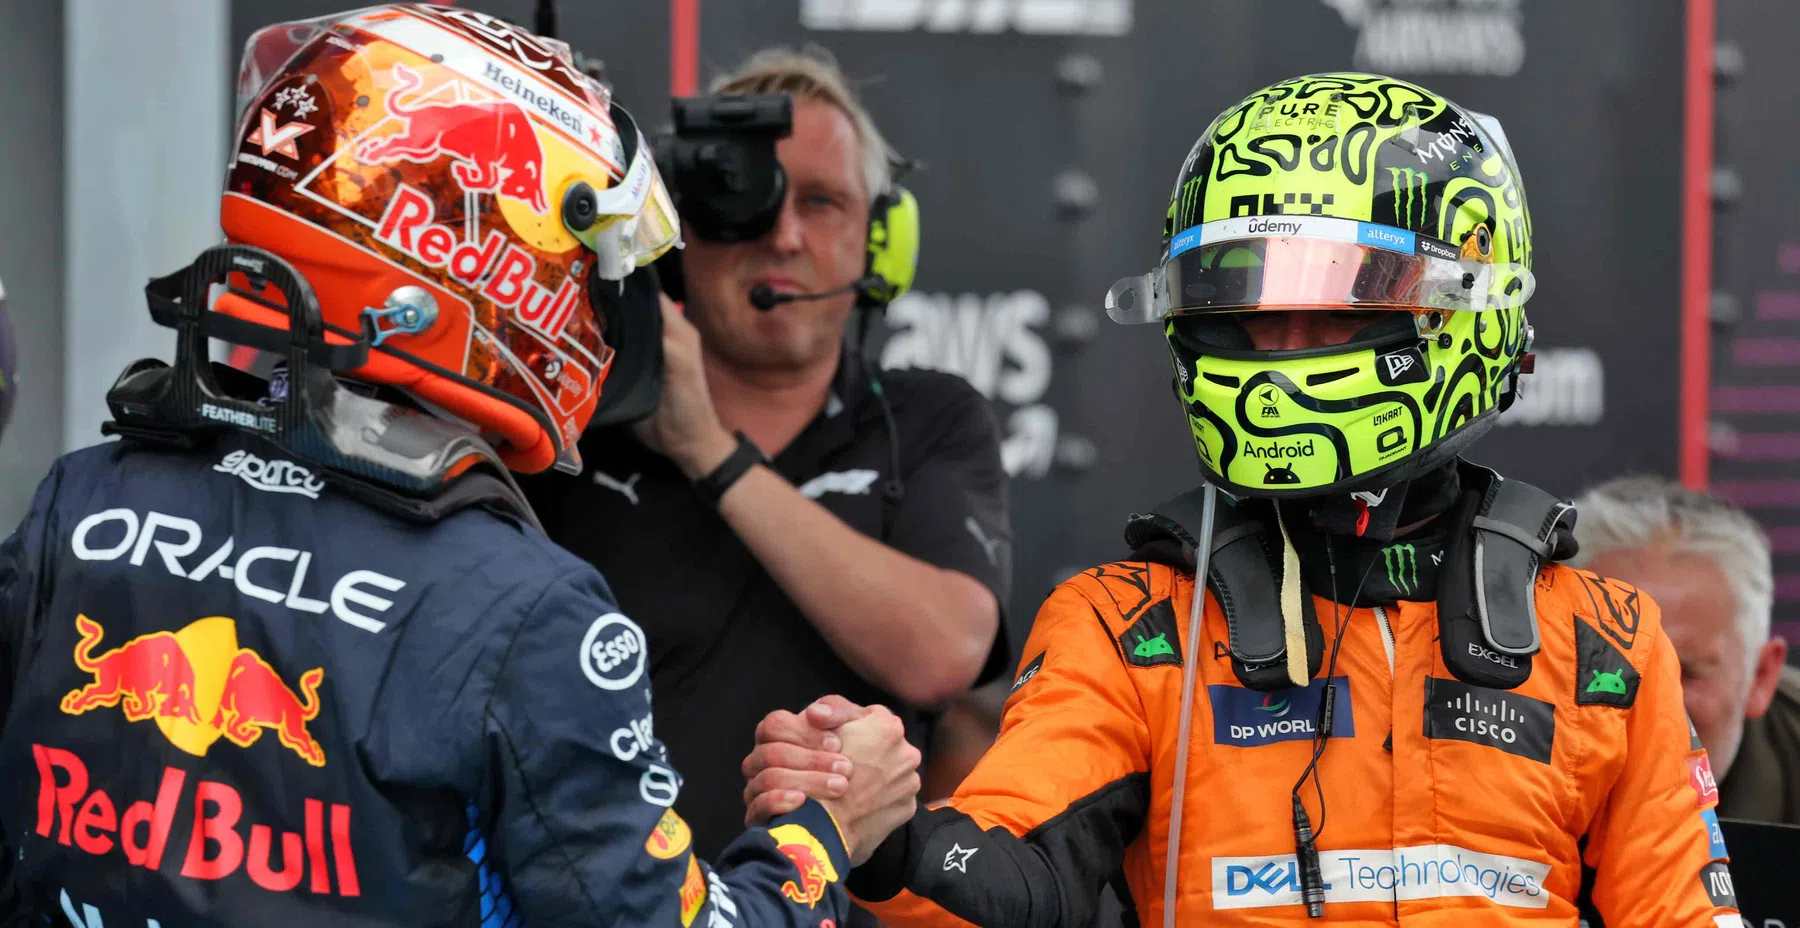 Spanish media denounce McLaren strategy after Verstappen win